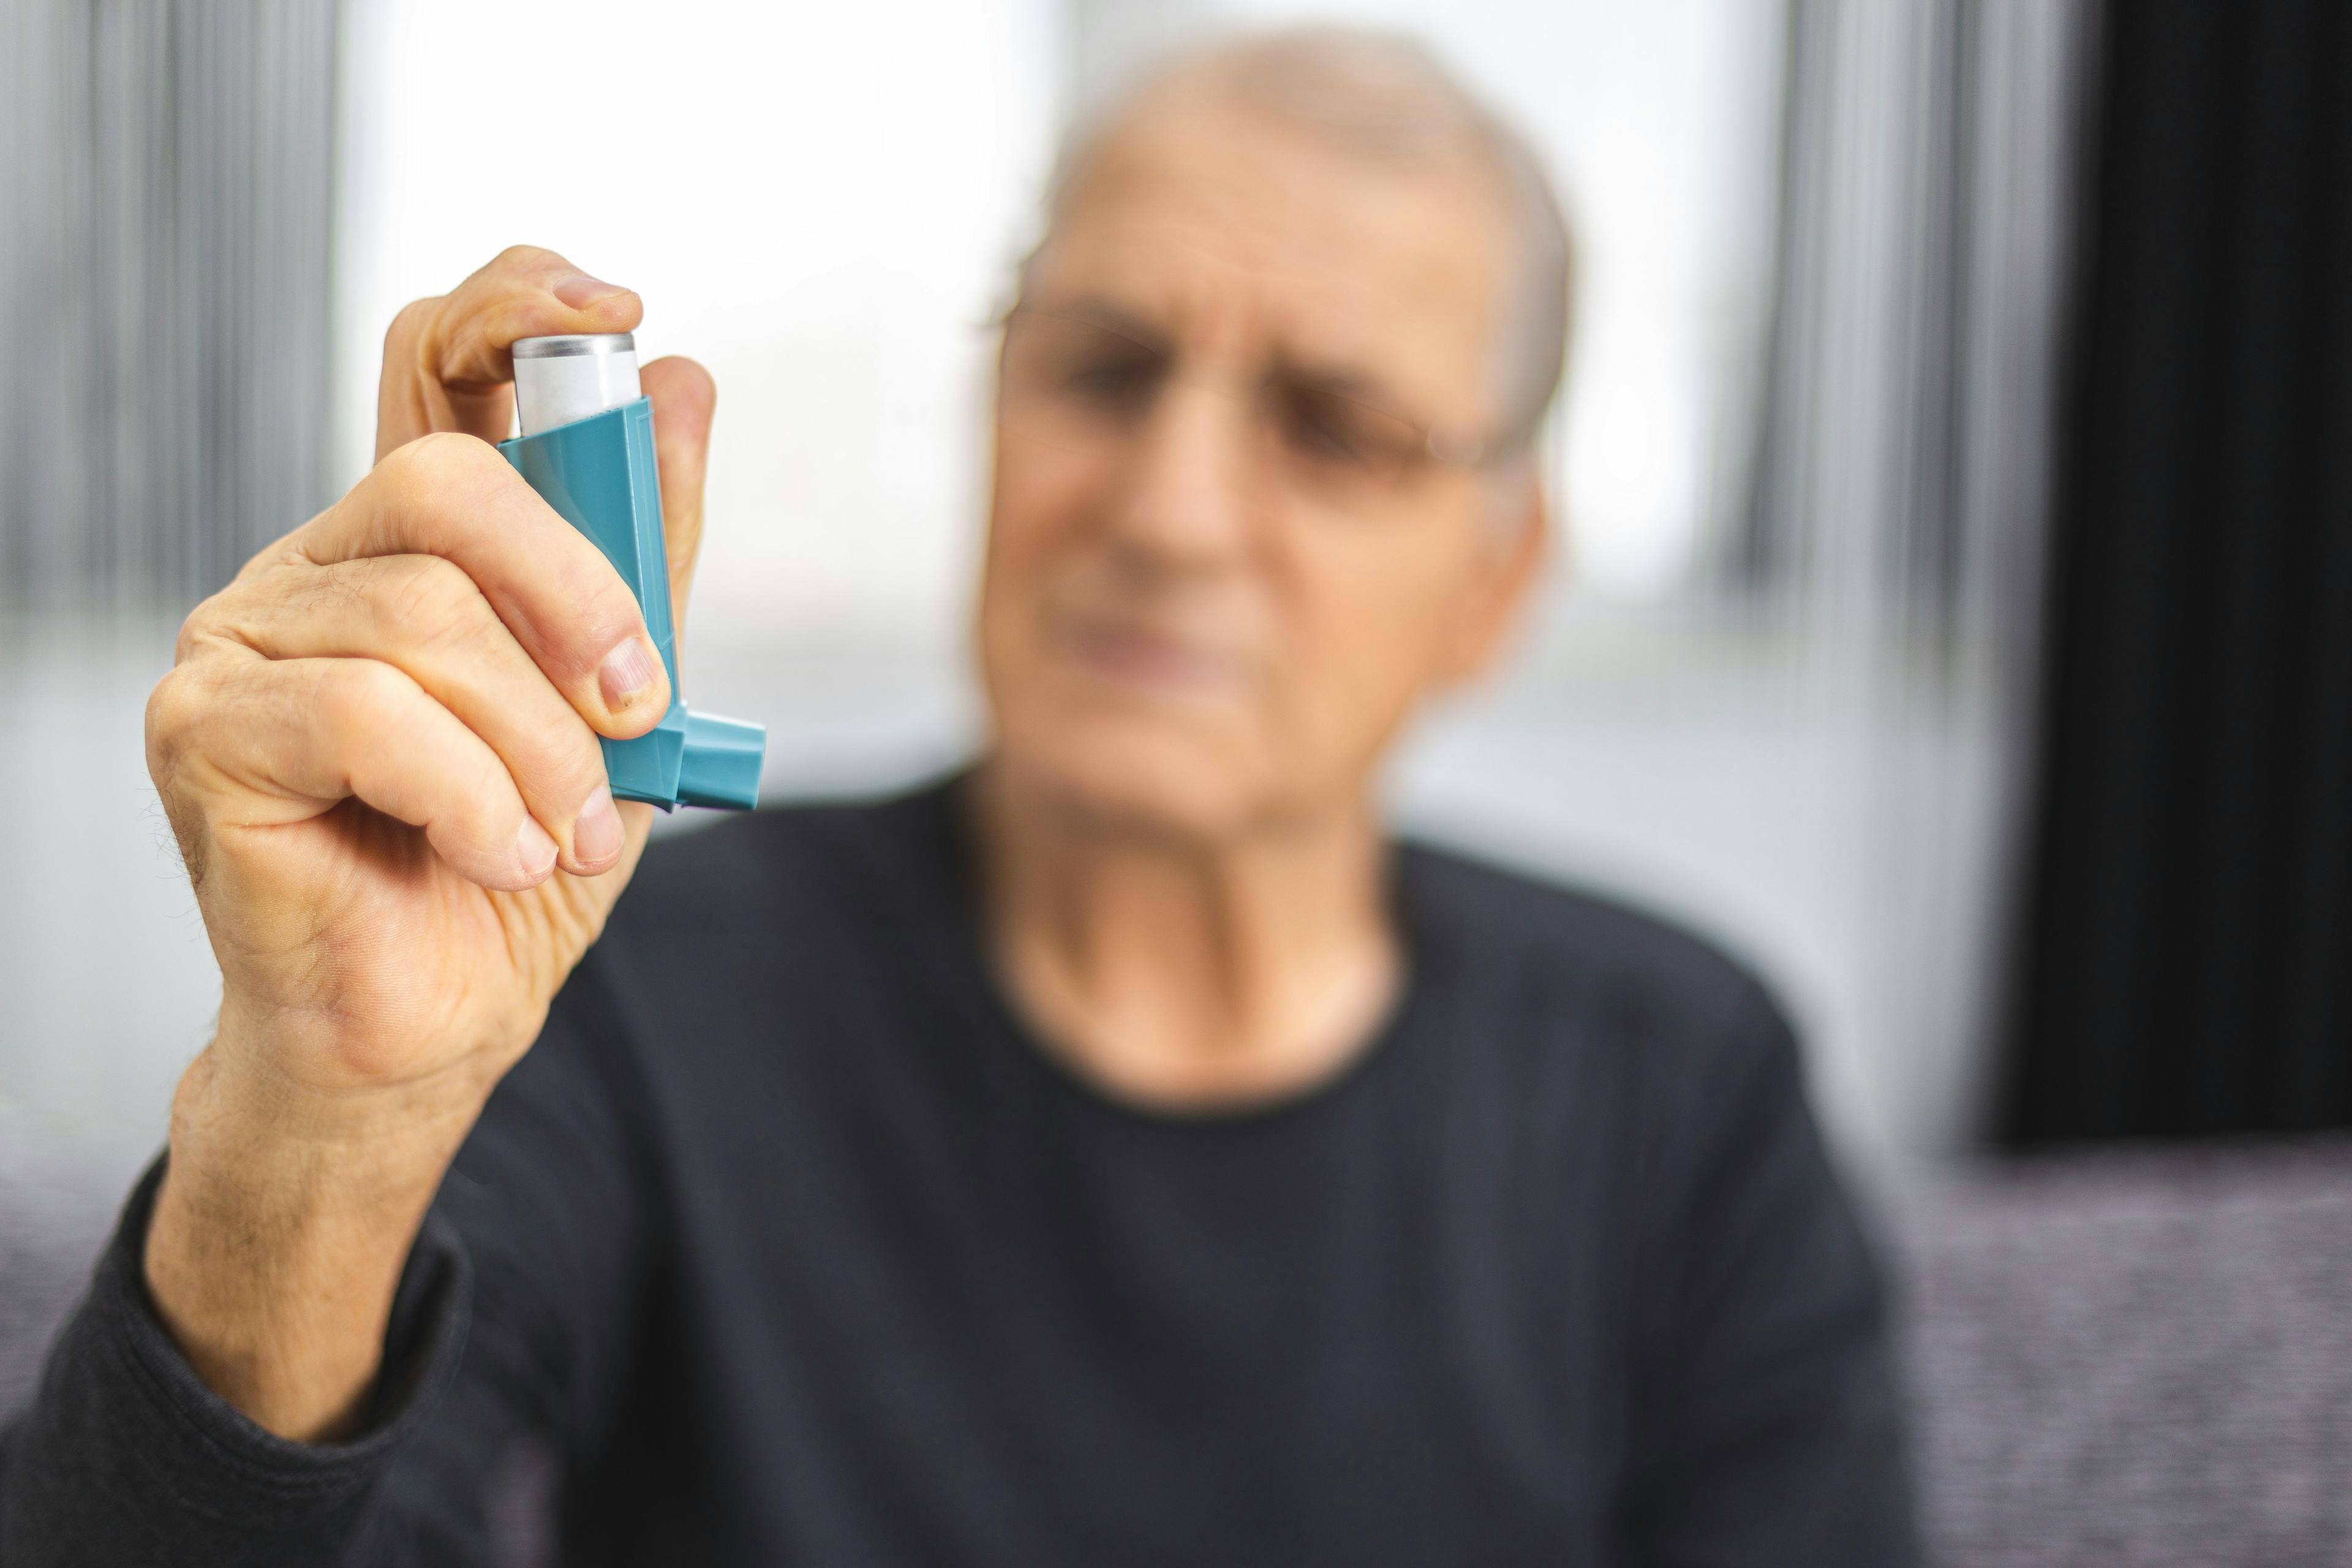 Elderly person holding an asthma inhaler